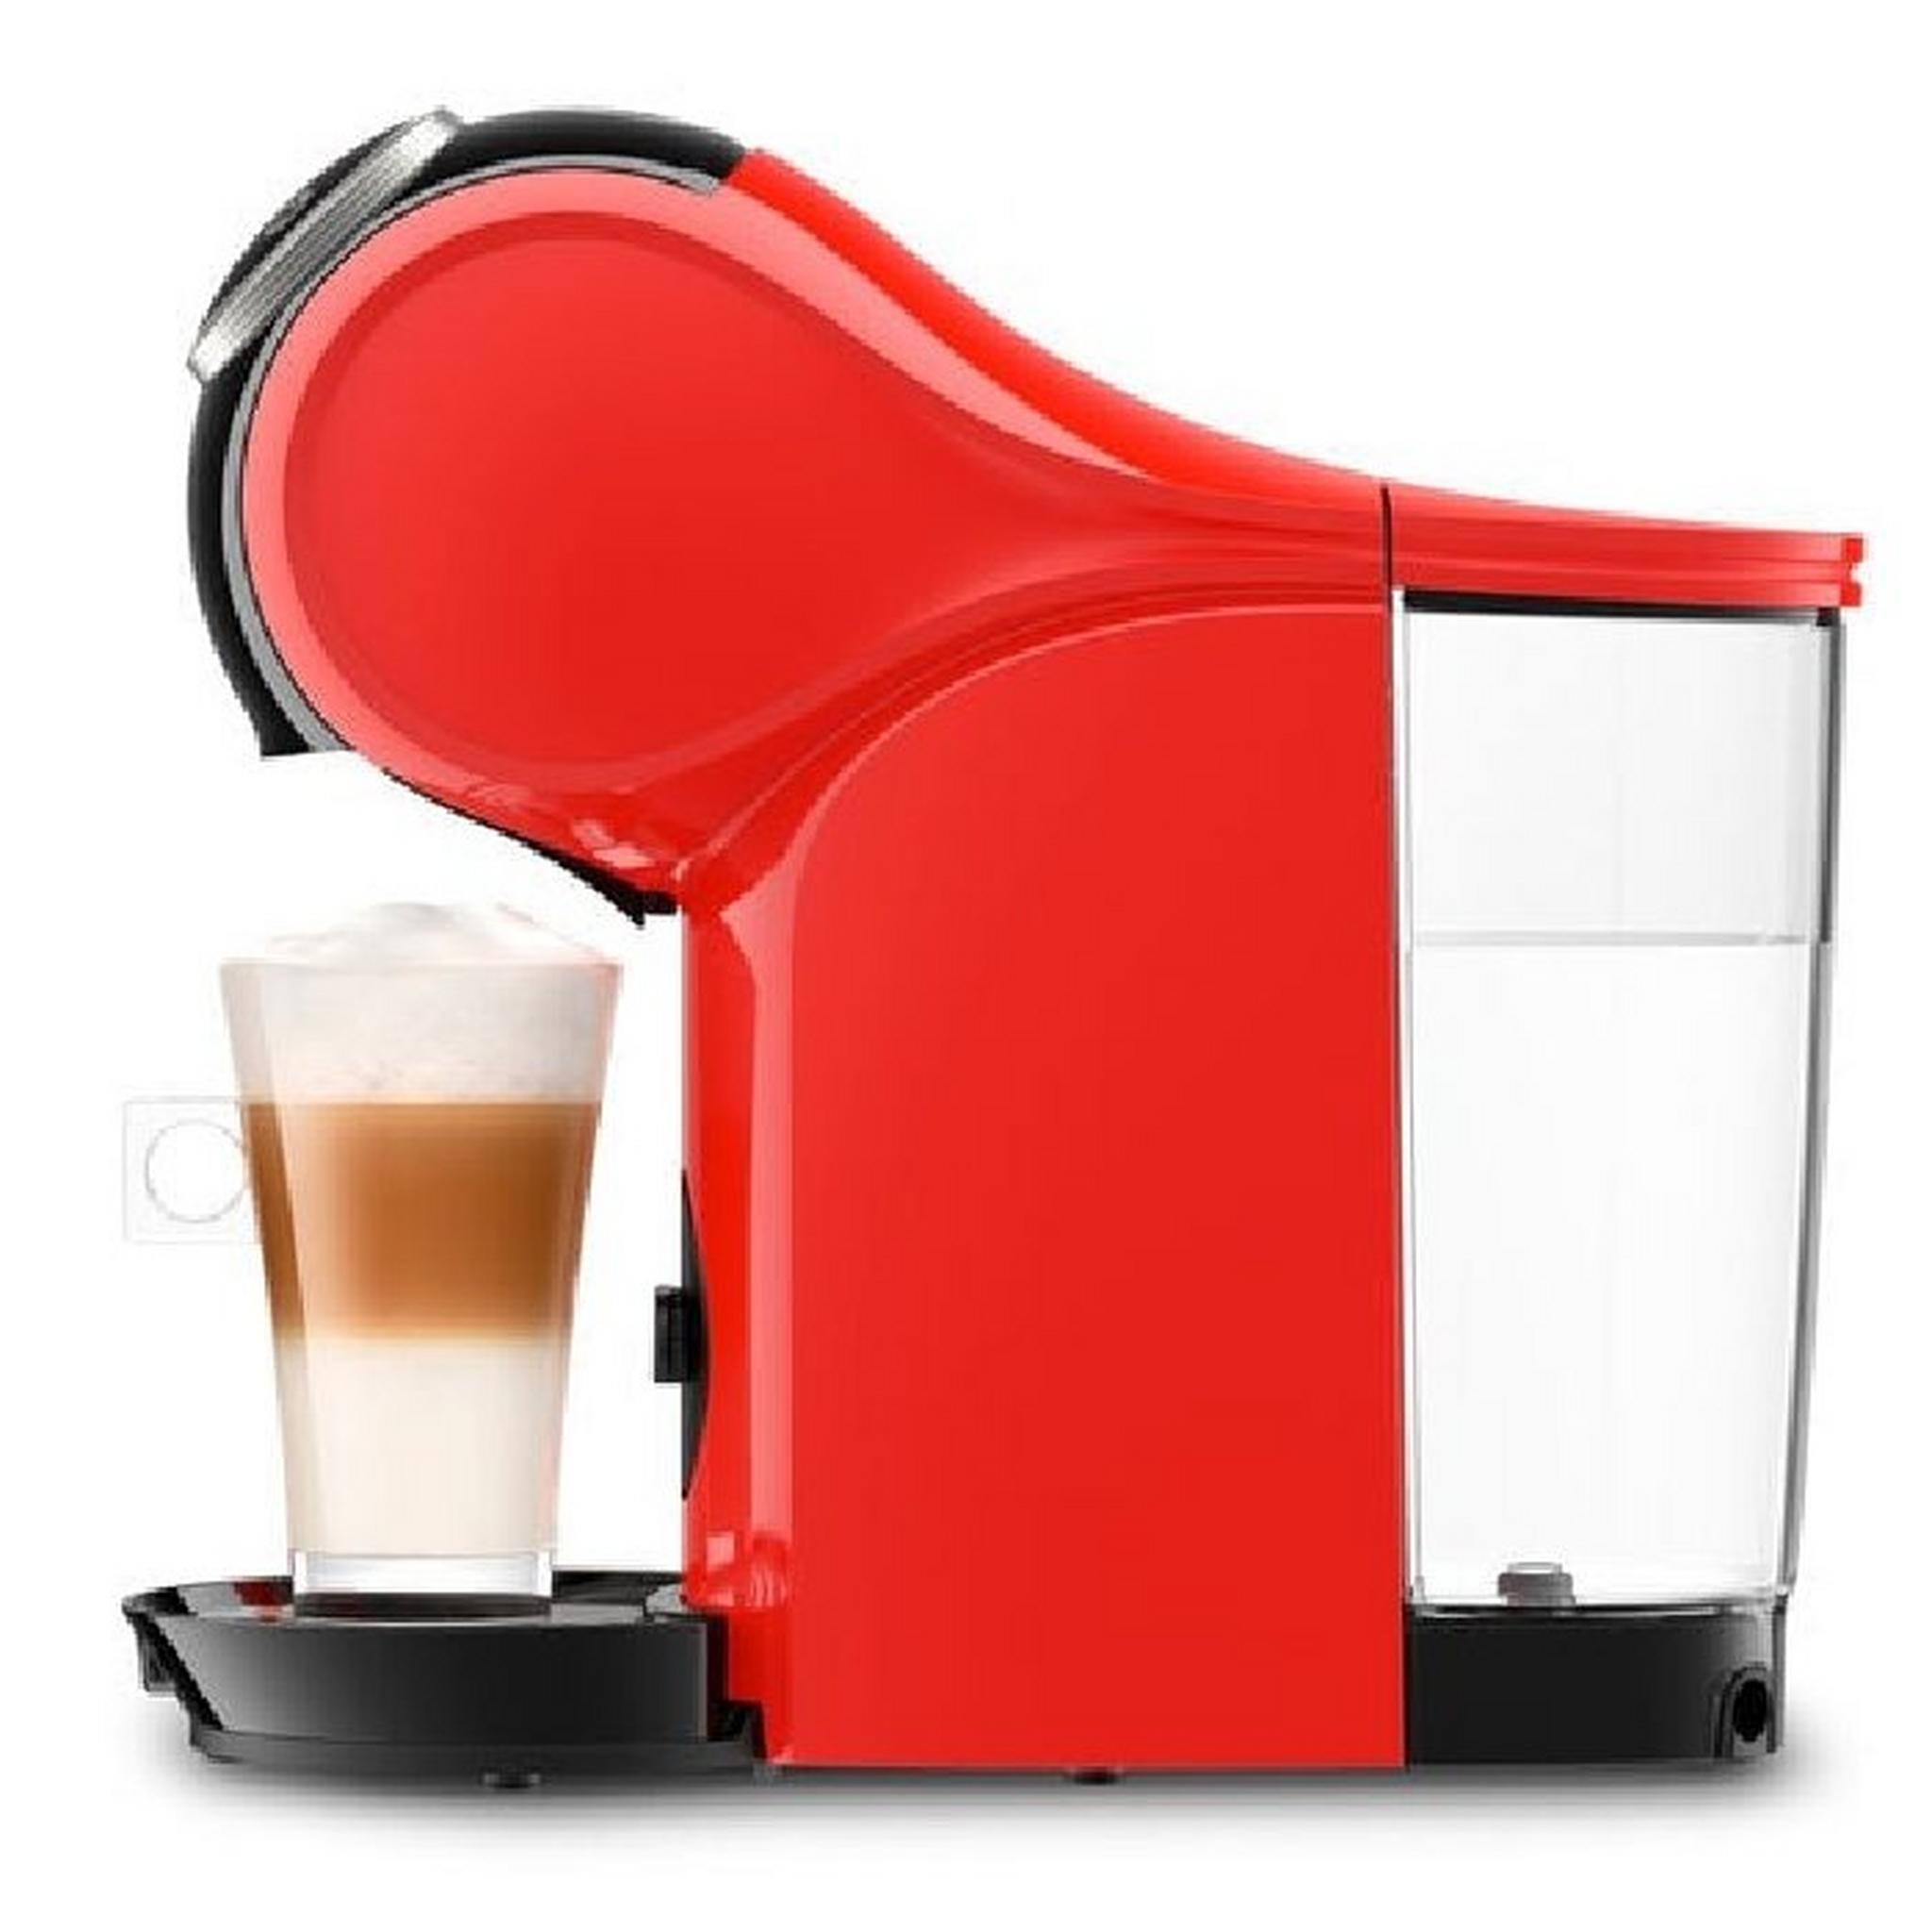 Delonghi Dolce Gusto Genio S Plus Coffee Maker - Red